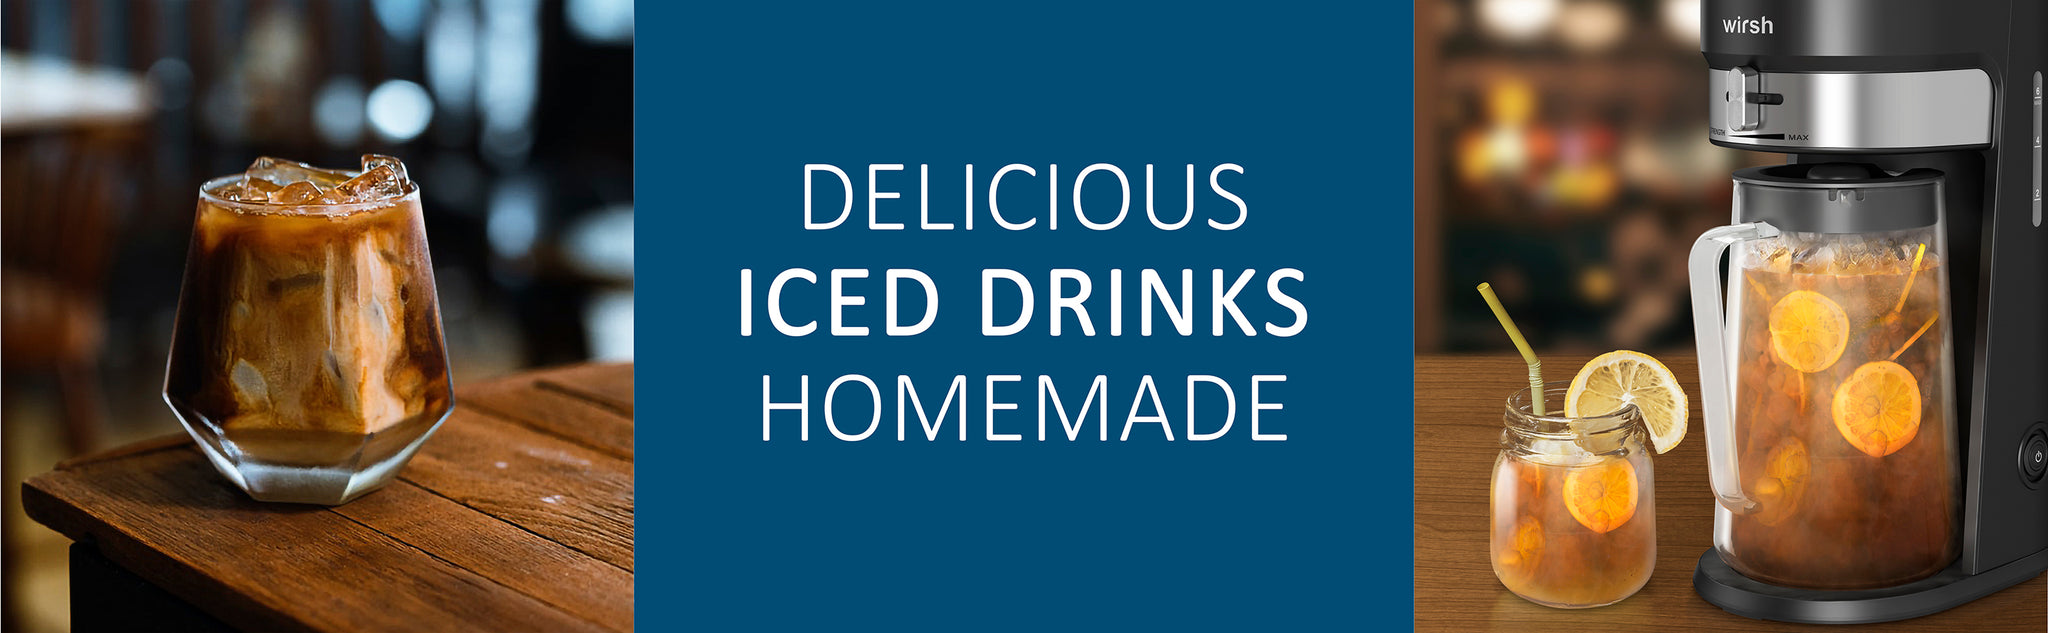 < img src="ice tea coffee maker.jpg" alt="wirsh ice tea coffee maker drinks homemade"/>